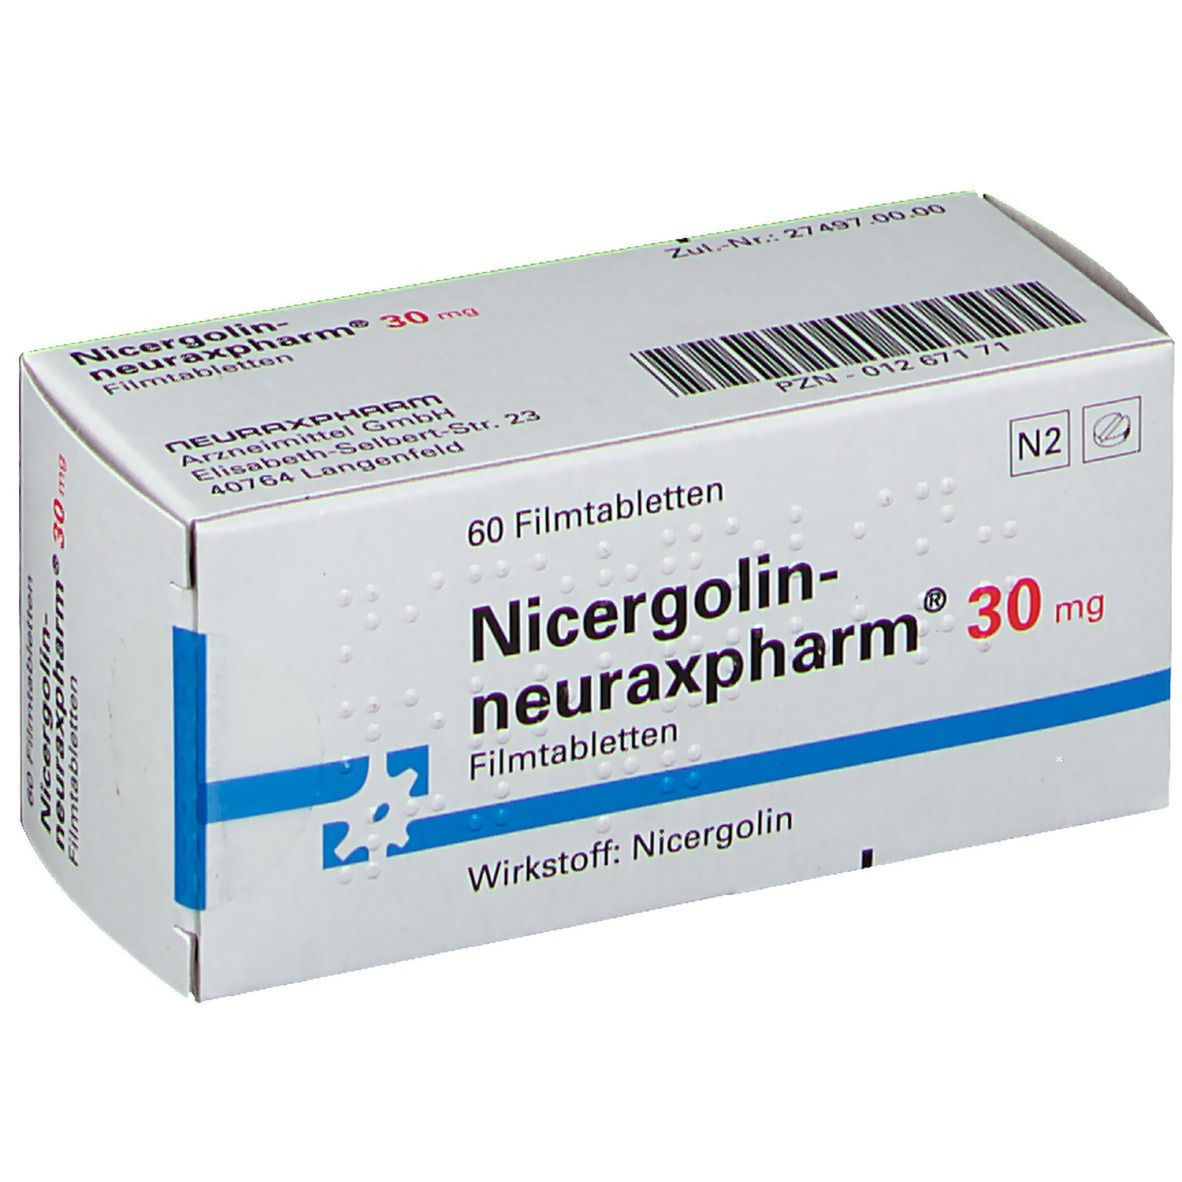 Nicergolin-neuraxpharm® 30 mg